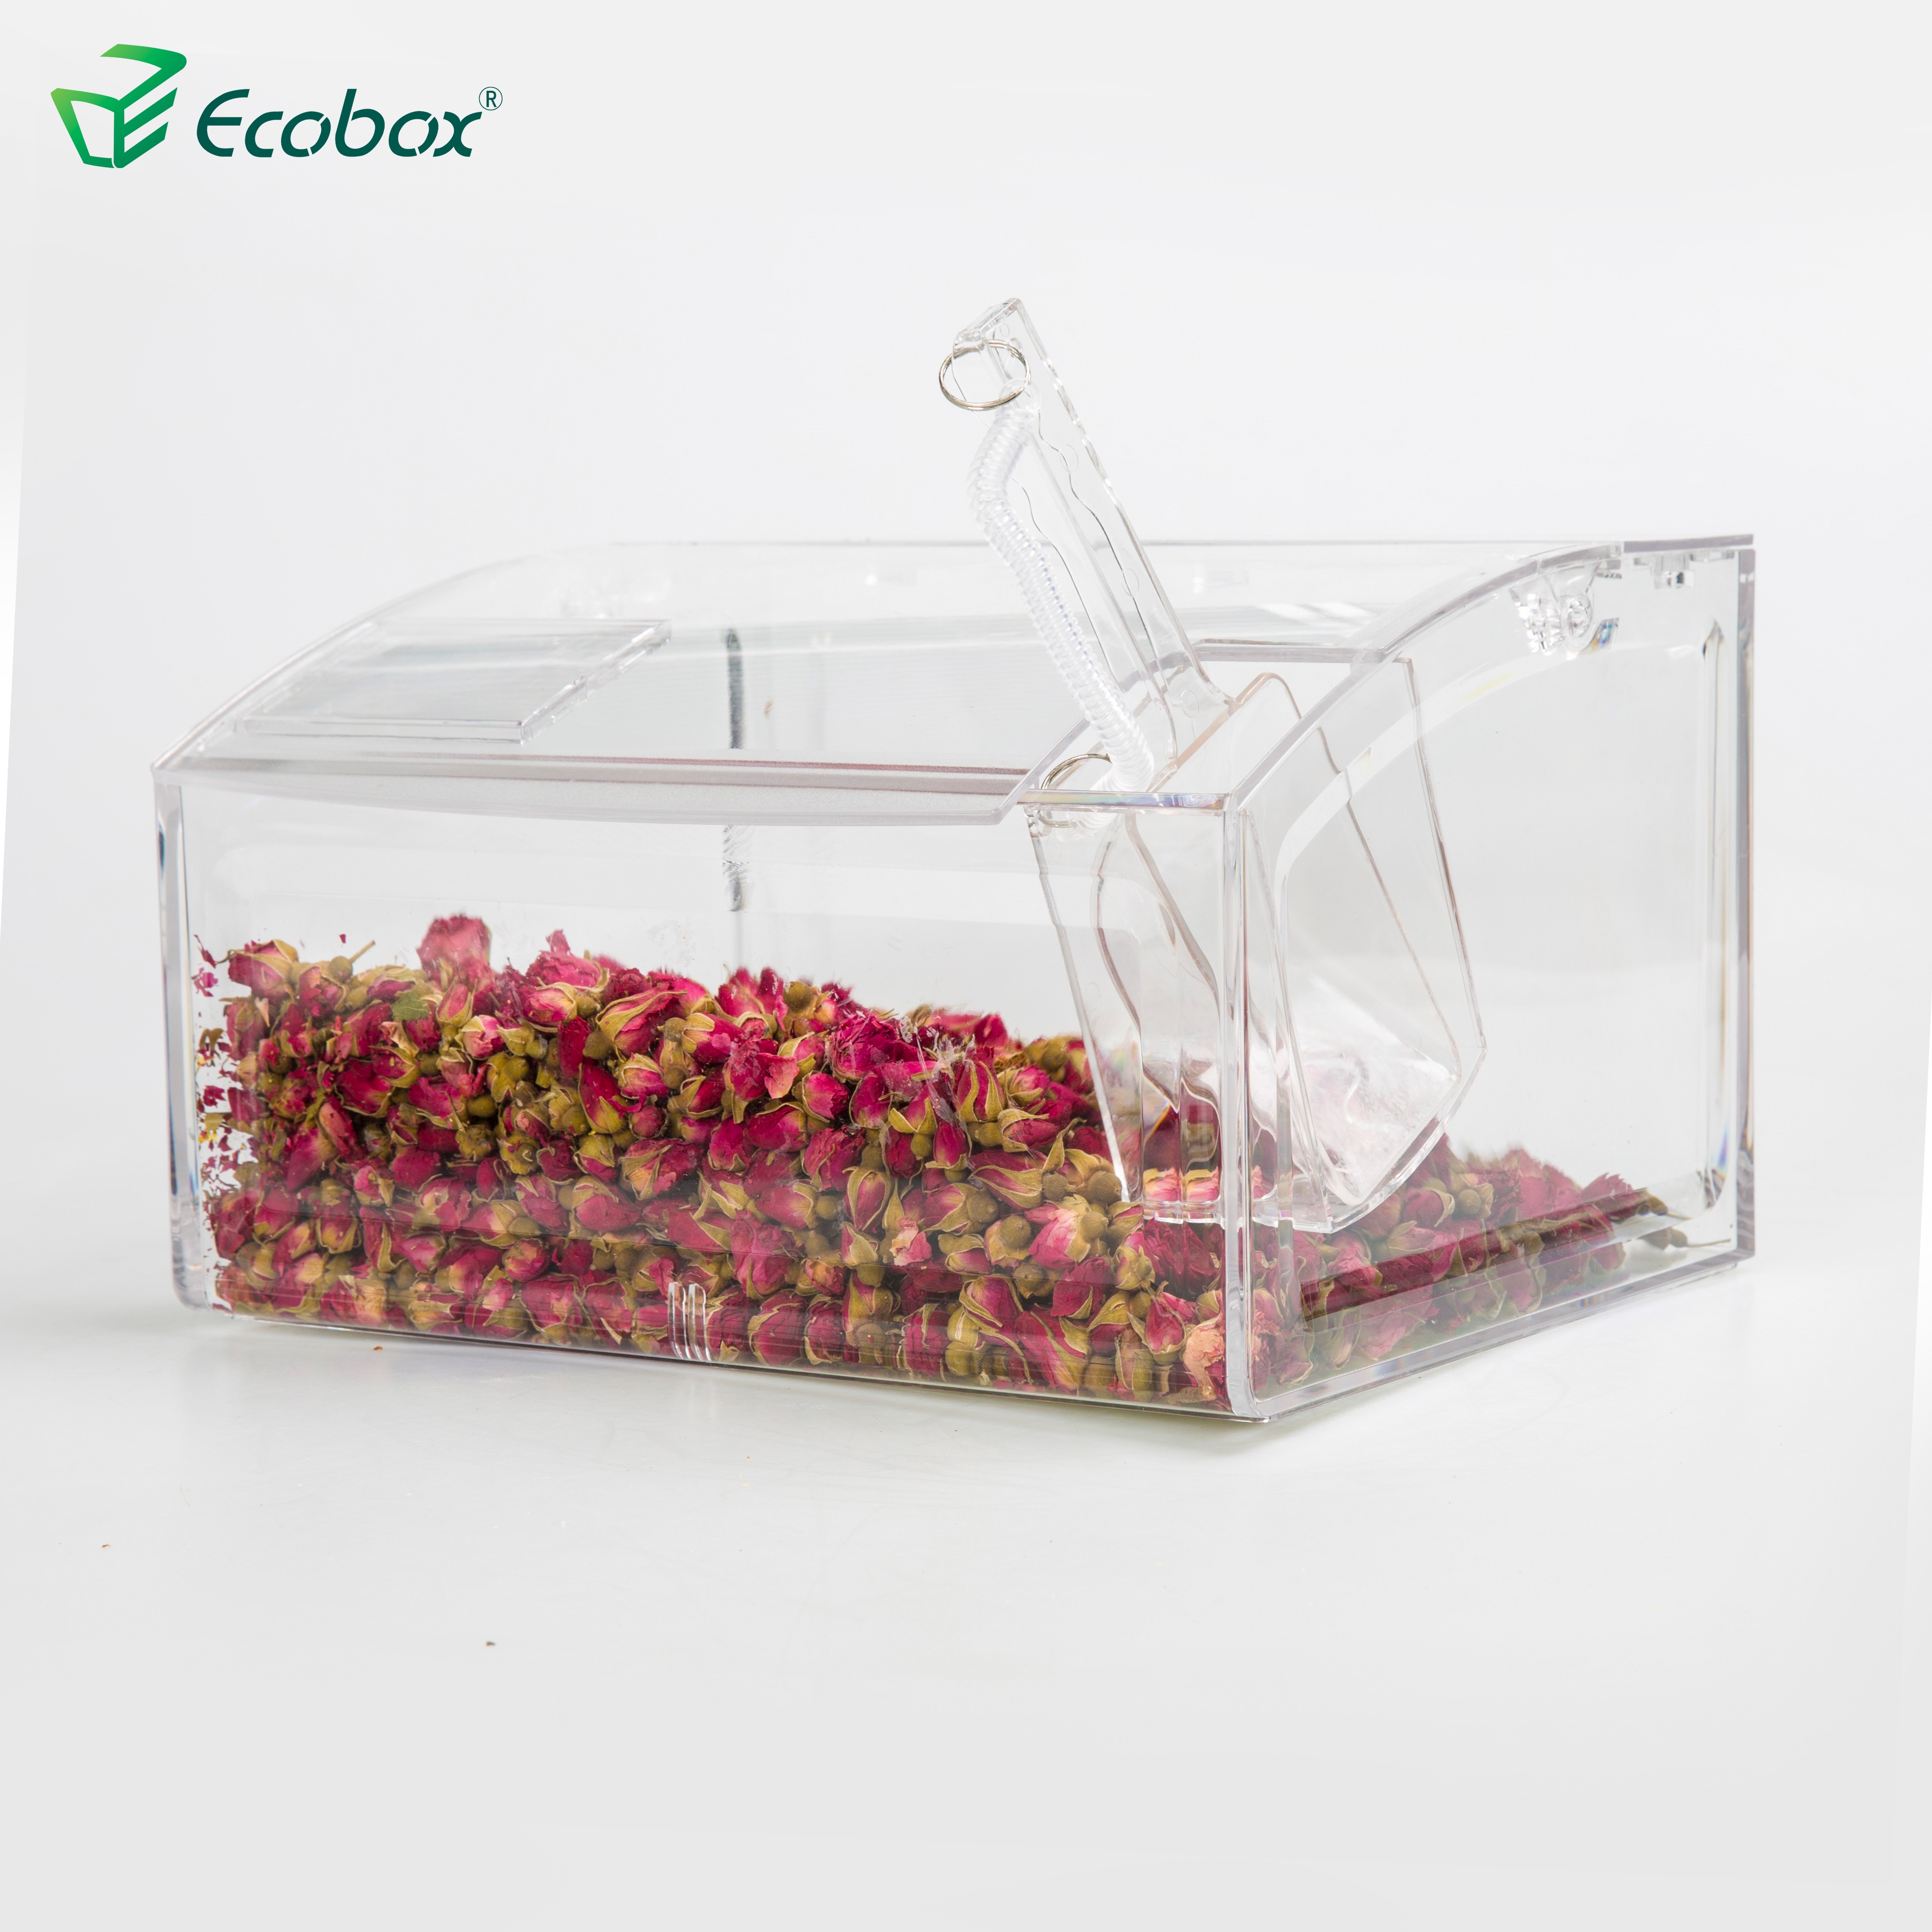 Ecobox Ecofriendly SPH-007 Supermarket bulk scoop bin for shop 